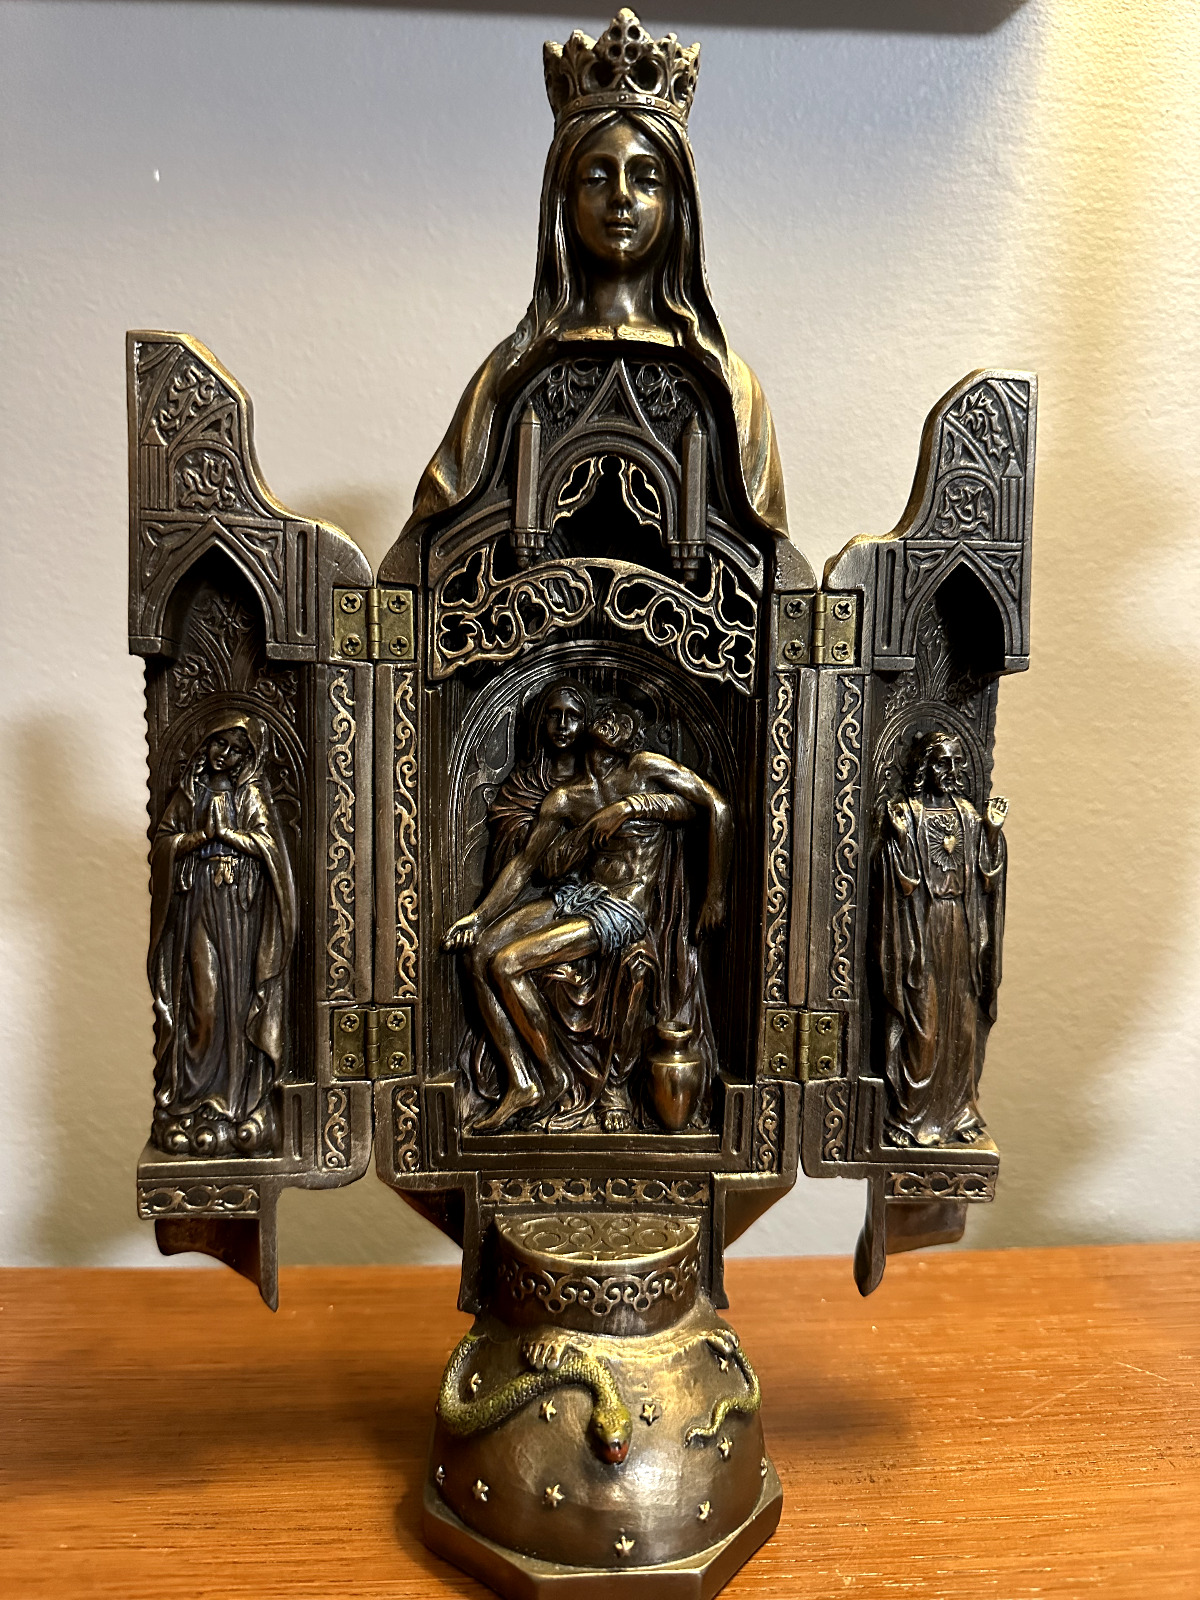 Mother Mary Statue Figurine, Triptych Sculpture of Pieta